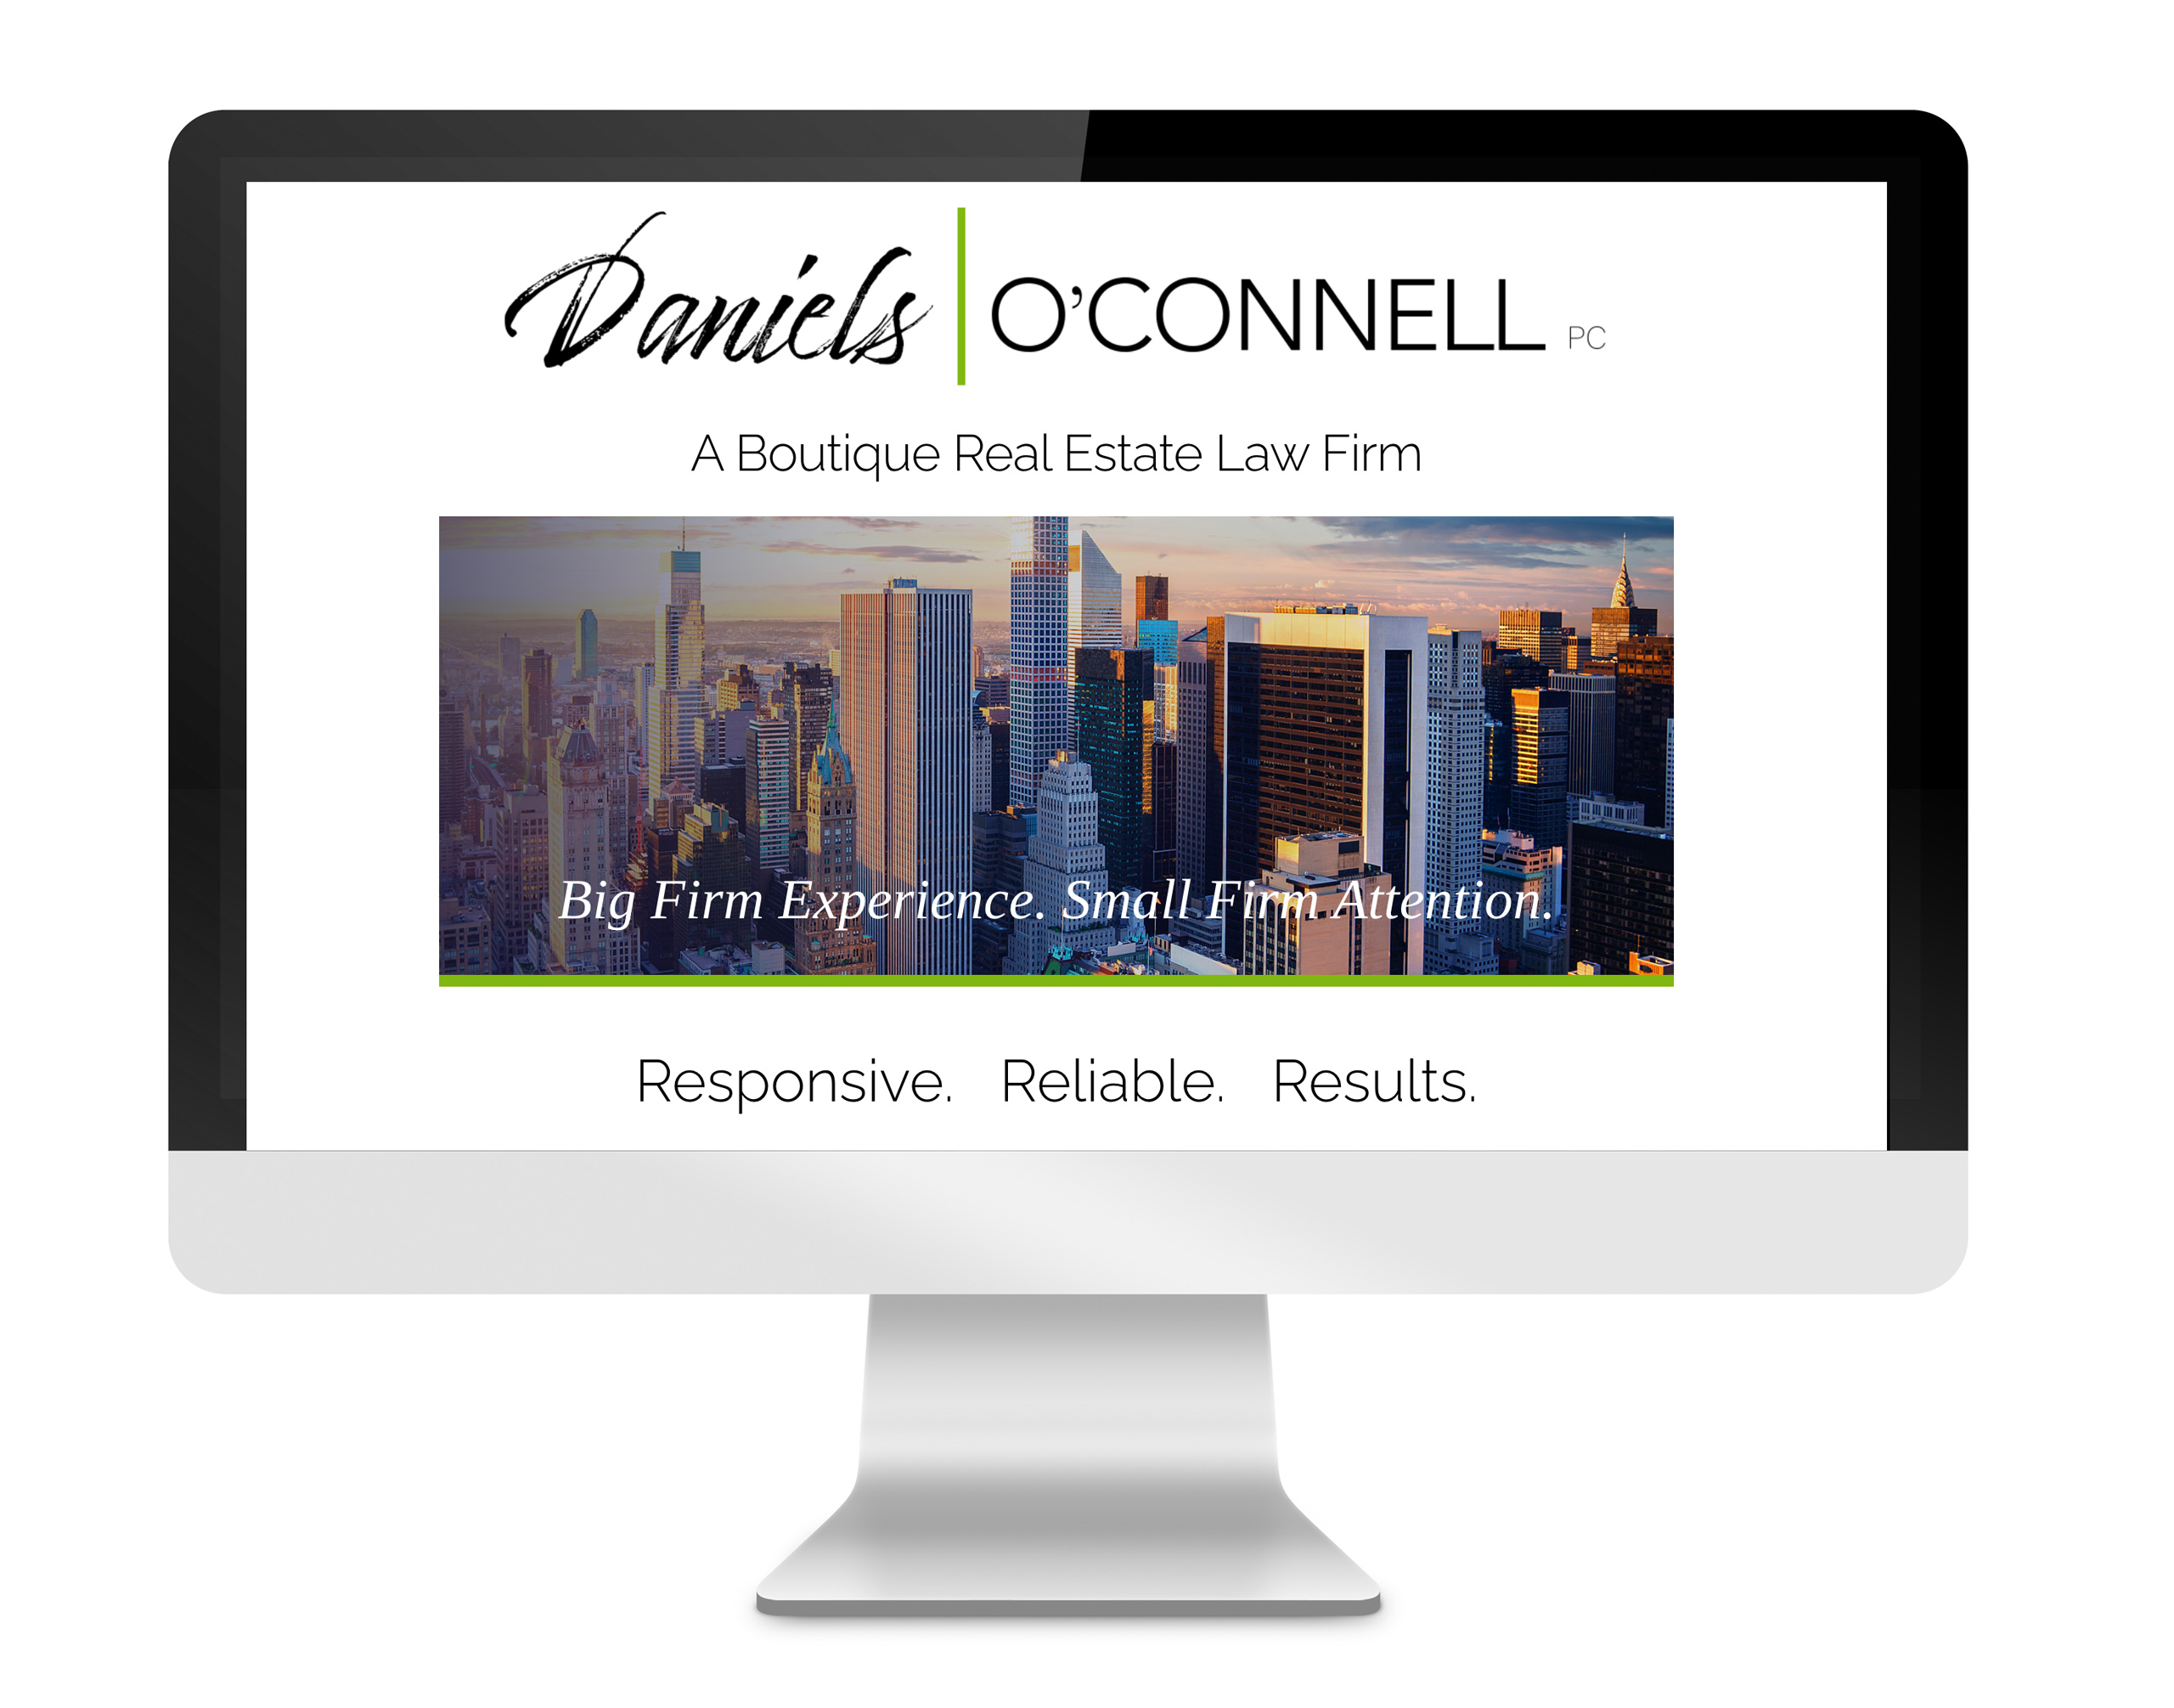 Daniels O'Connell website designed by DLS Design